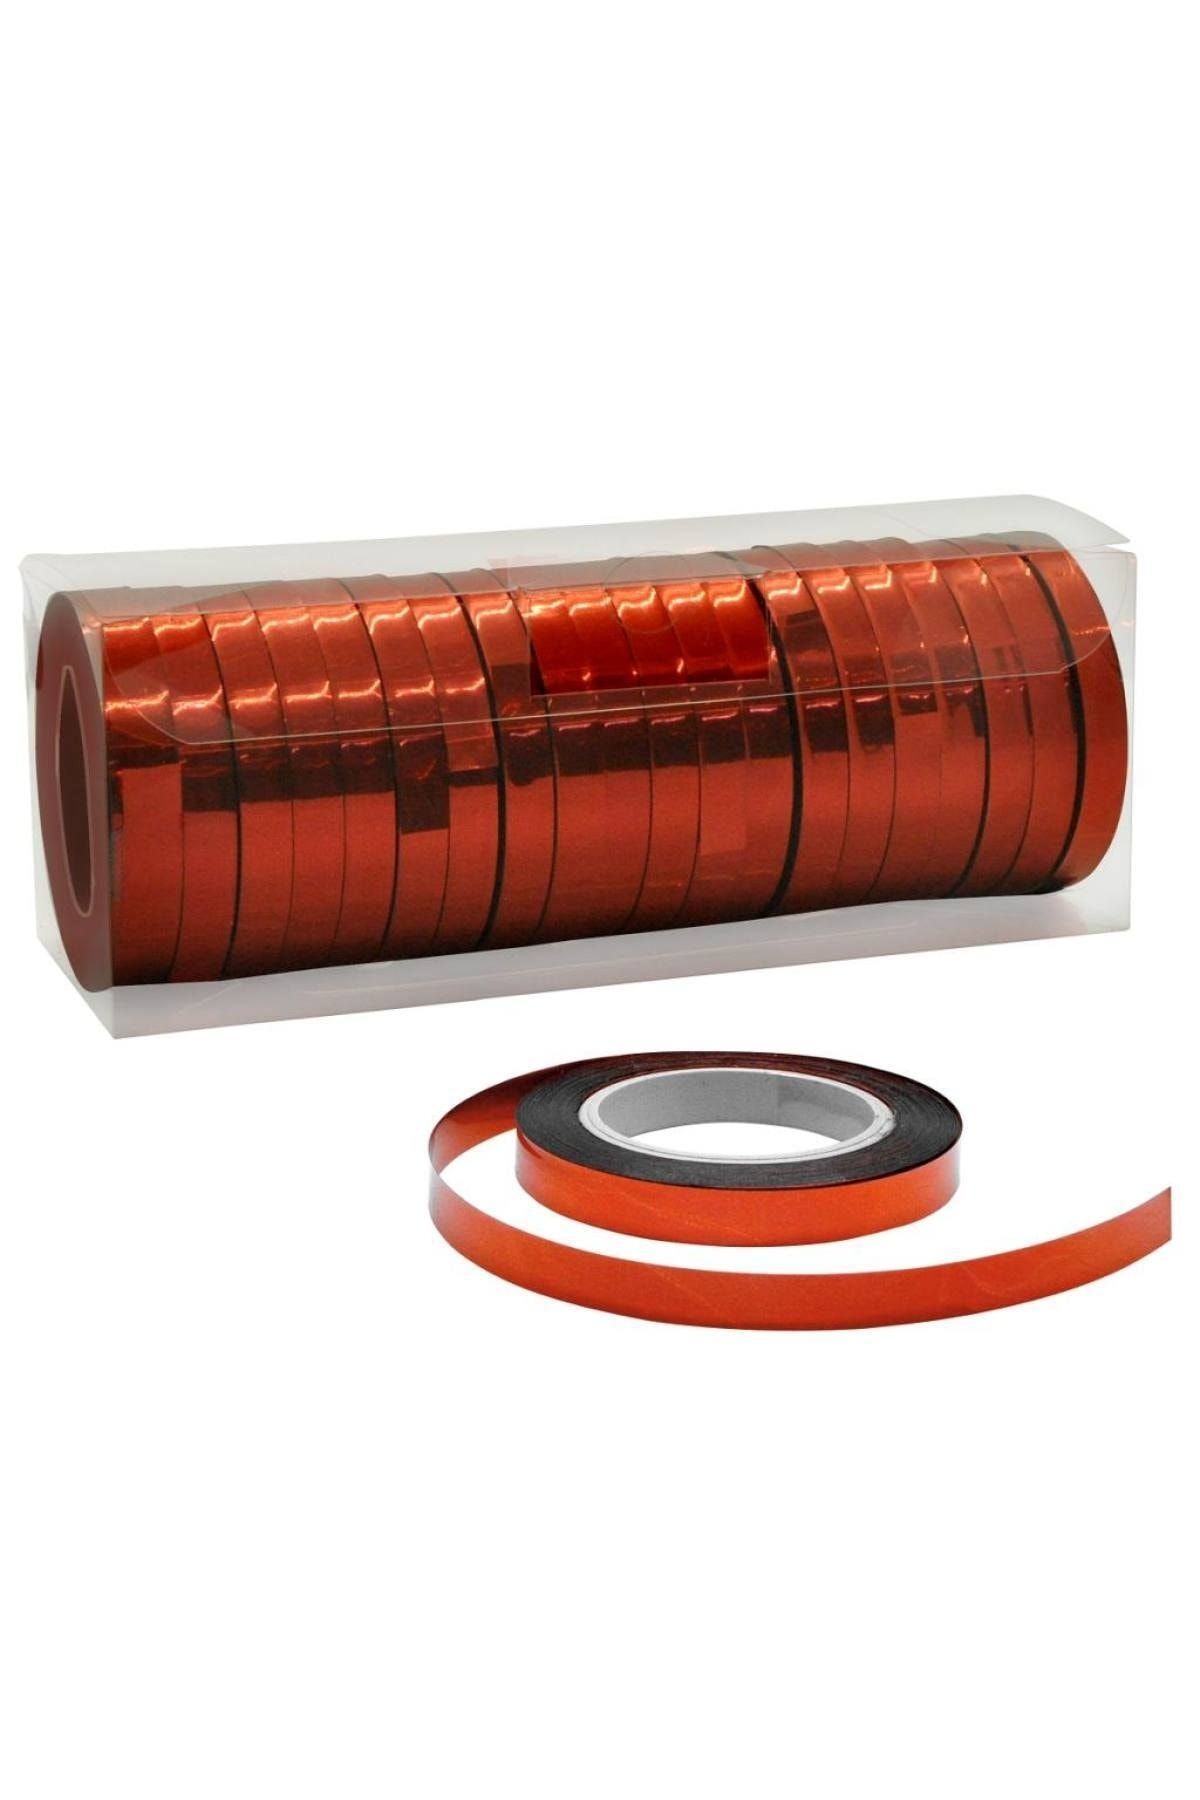 BAL10 DÜNYASI 25 Meters Metalized Red Raffia Ribbon - Trendyol